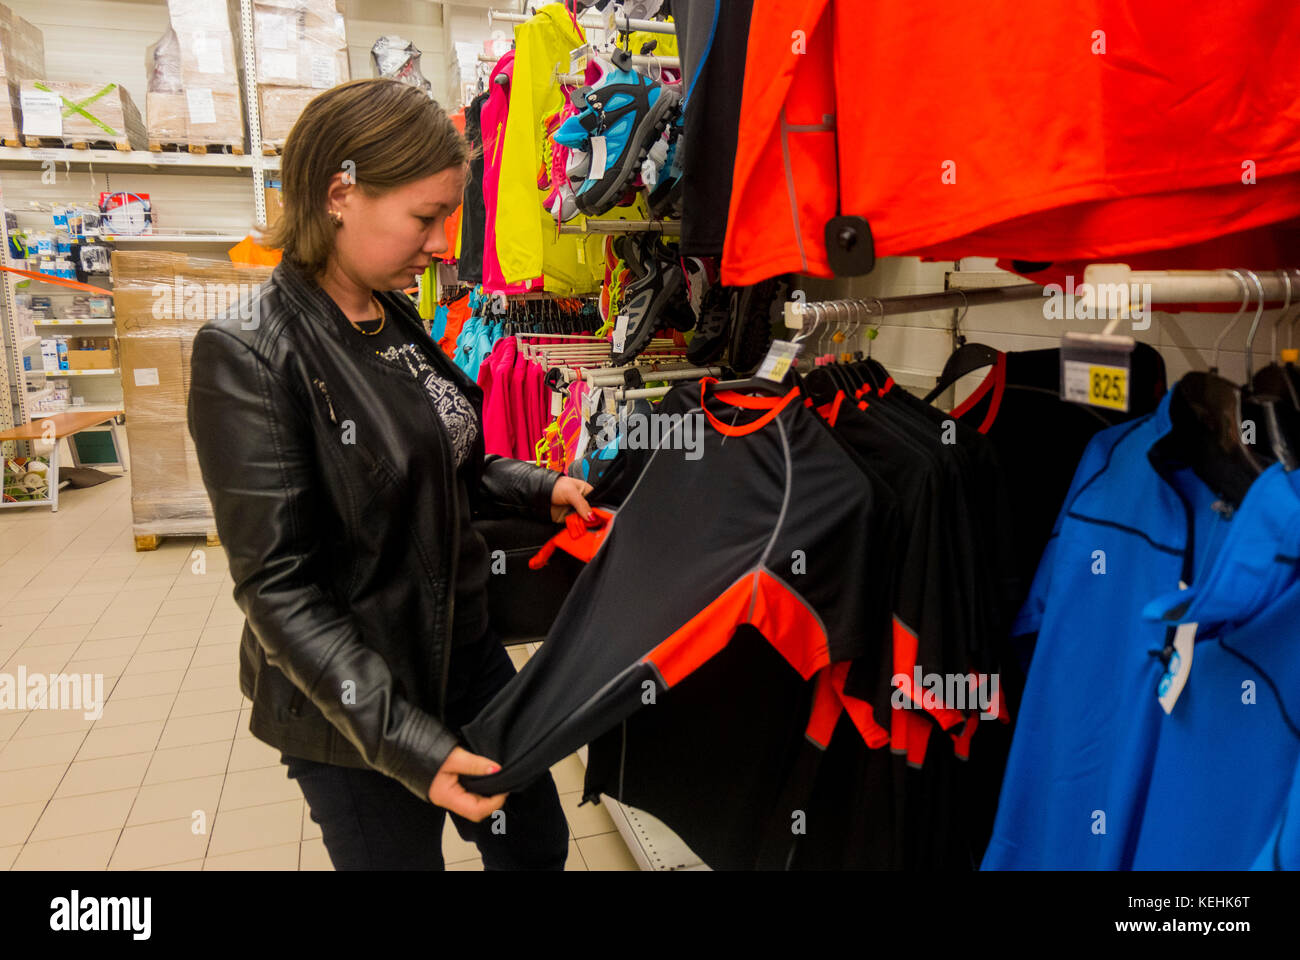 Caucasian woman examining shirt in store Stock Photo